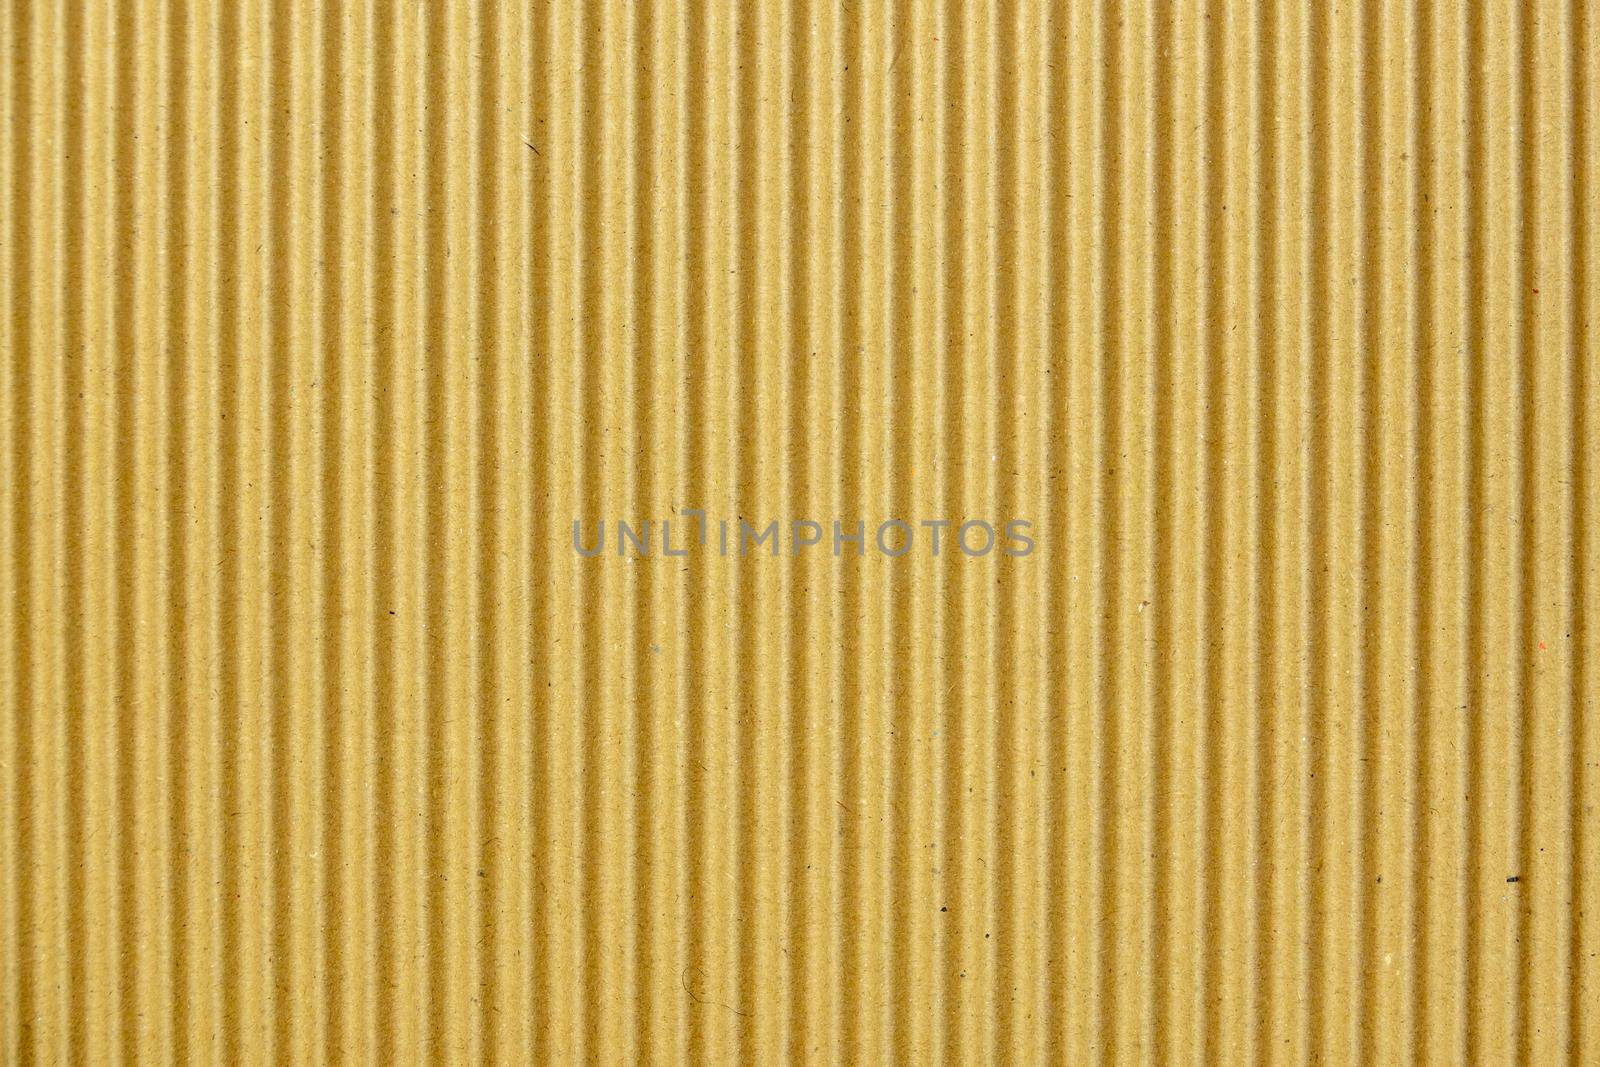 Corrugated Cardboard Texture Background by mrdoomits